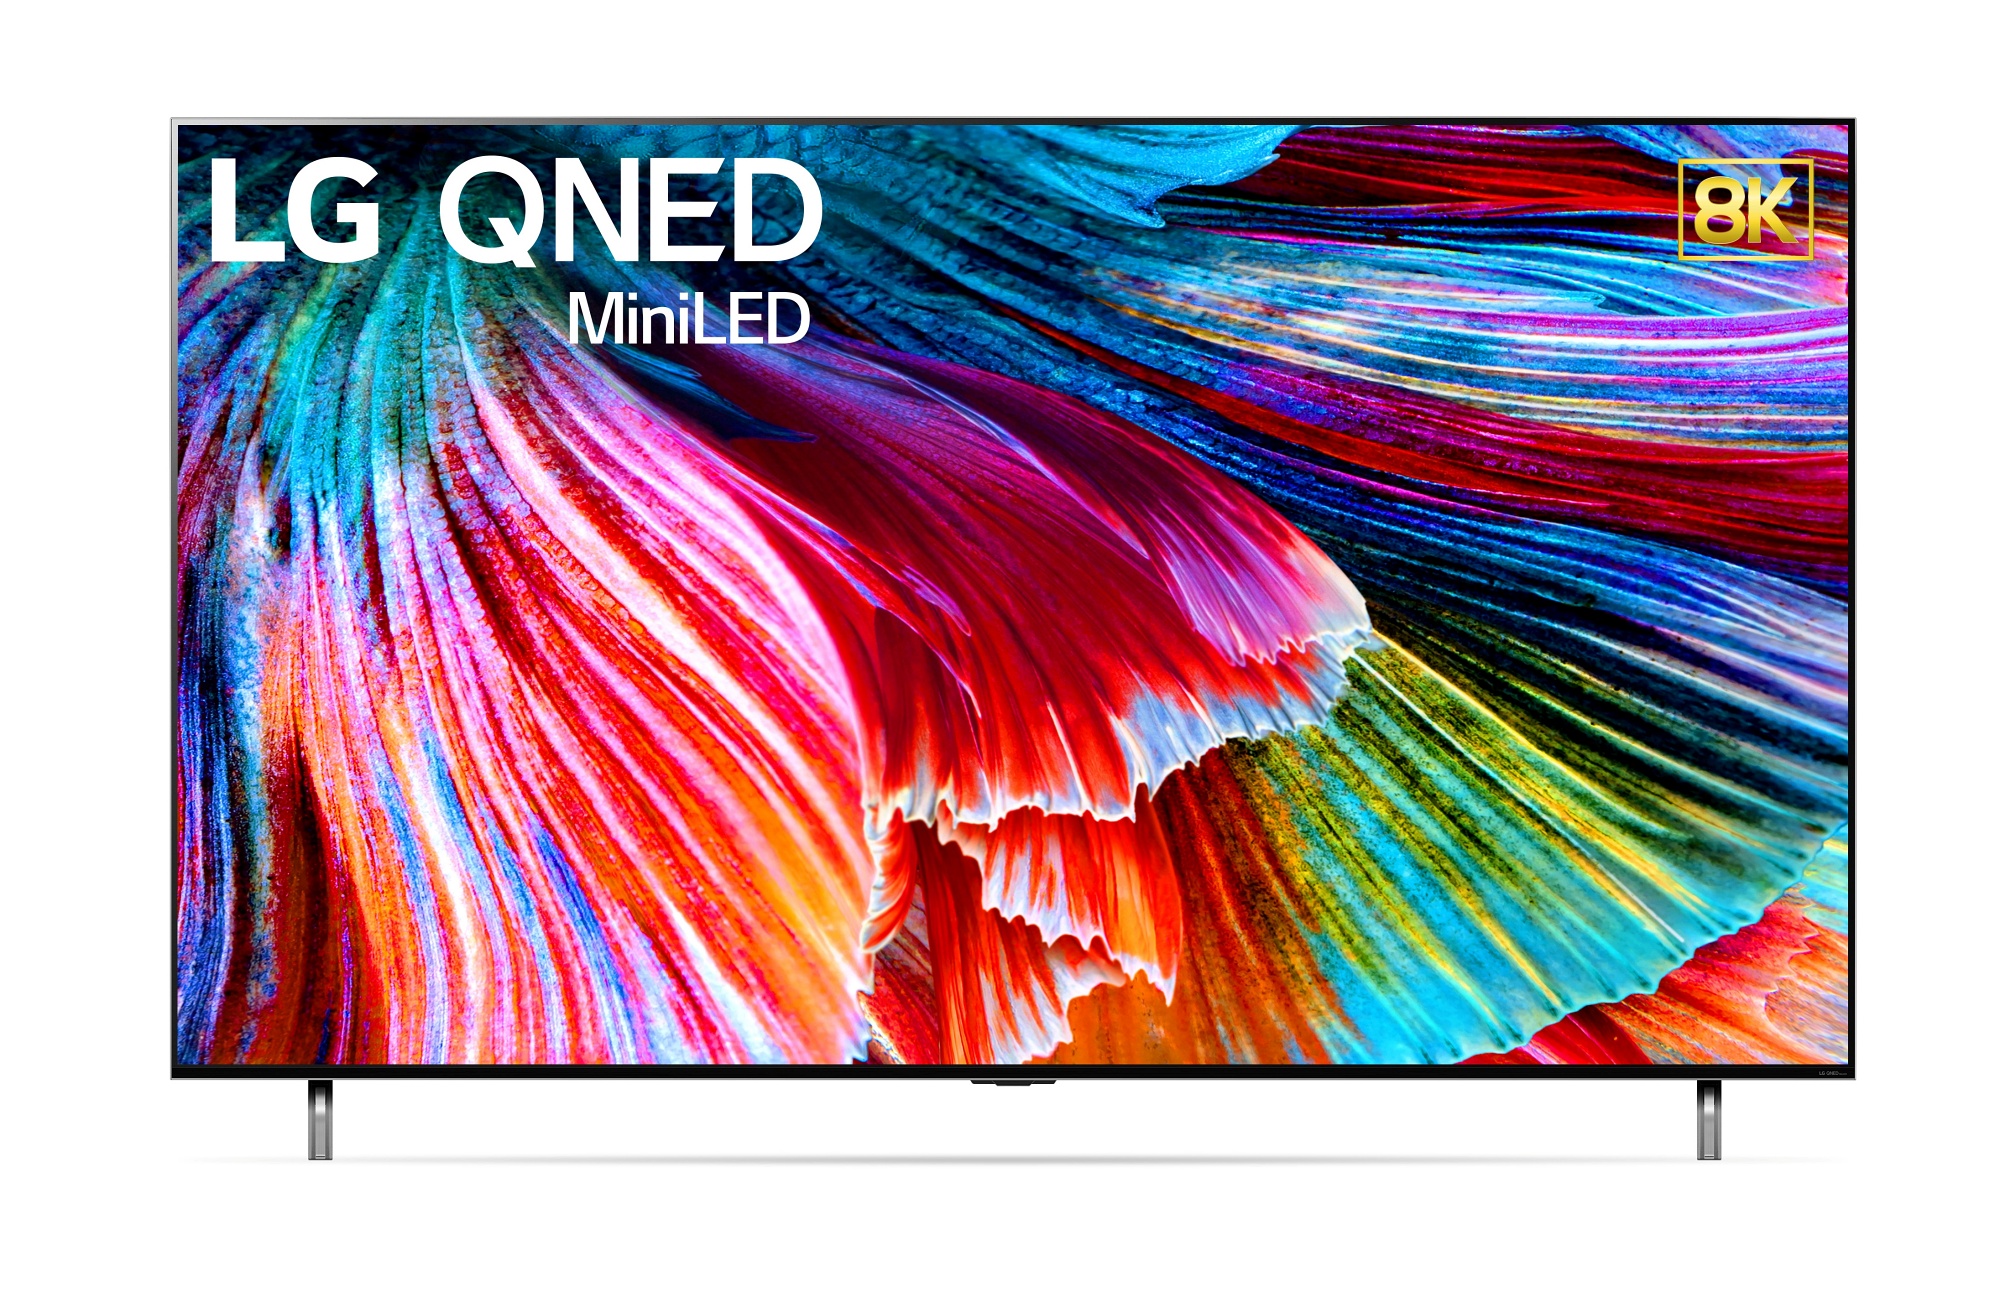 , LG QNED MiniLED: Ξεκινάει η διάθεση της νέας σειράς τηλεοράσεων 8K